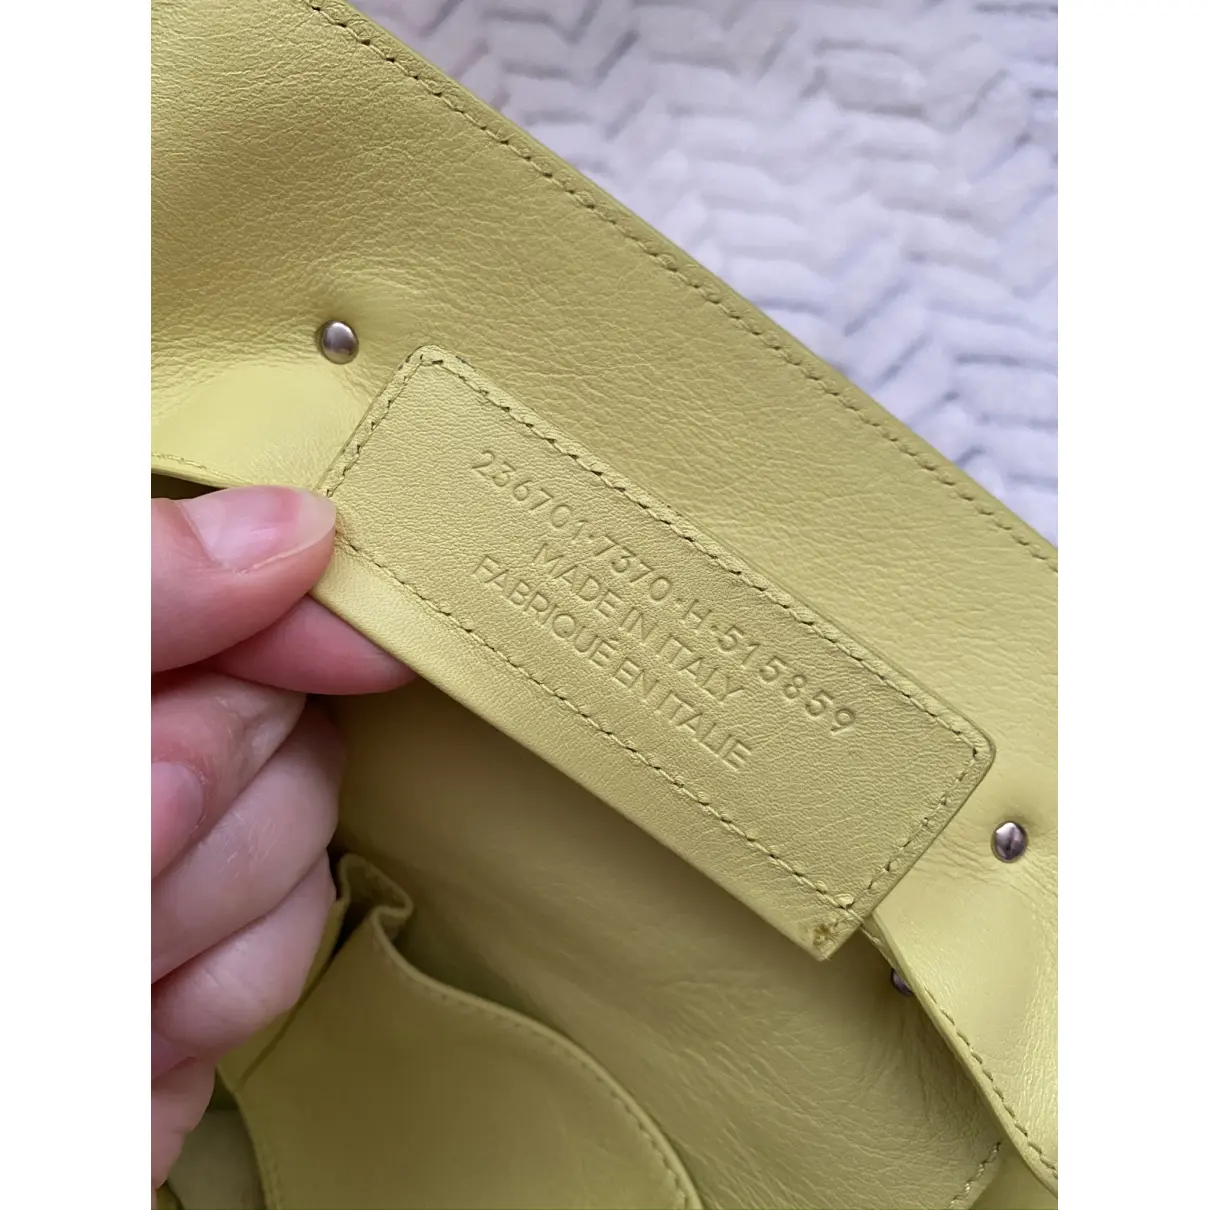 Buy Balenciaga Papier leather handbag online